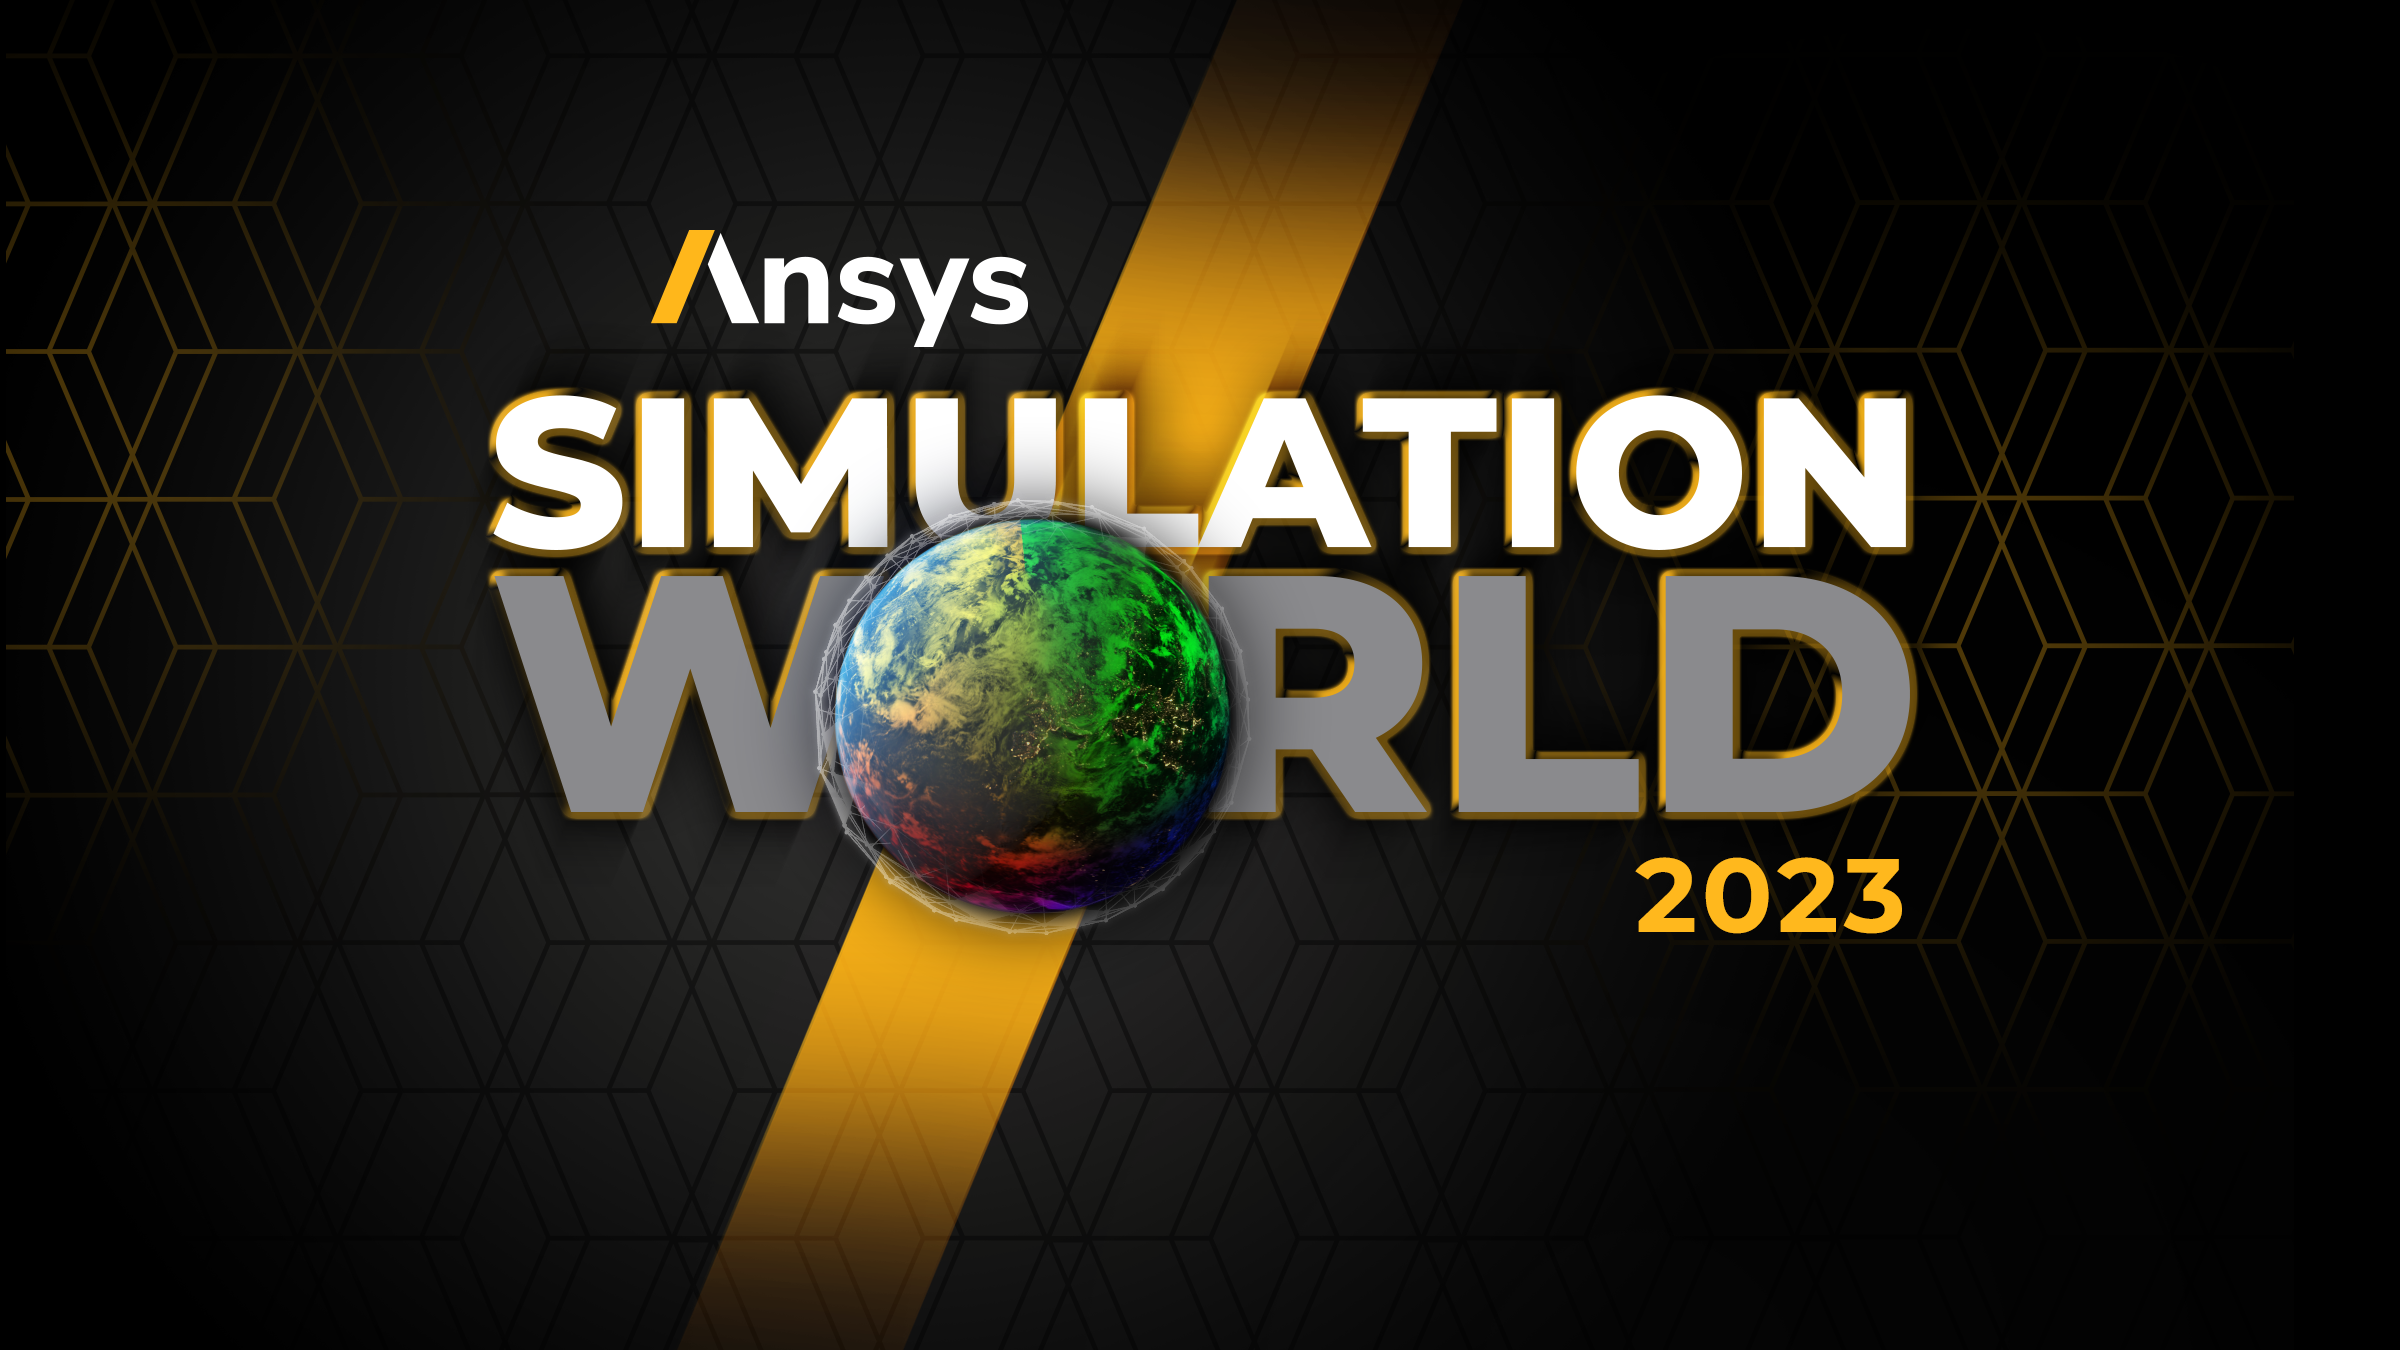 Ansys Simulation World 2023 - Japan 人類の進歩を促進するイノベーションに力を